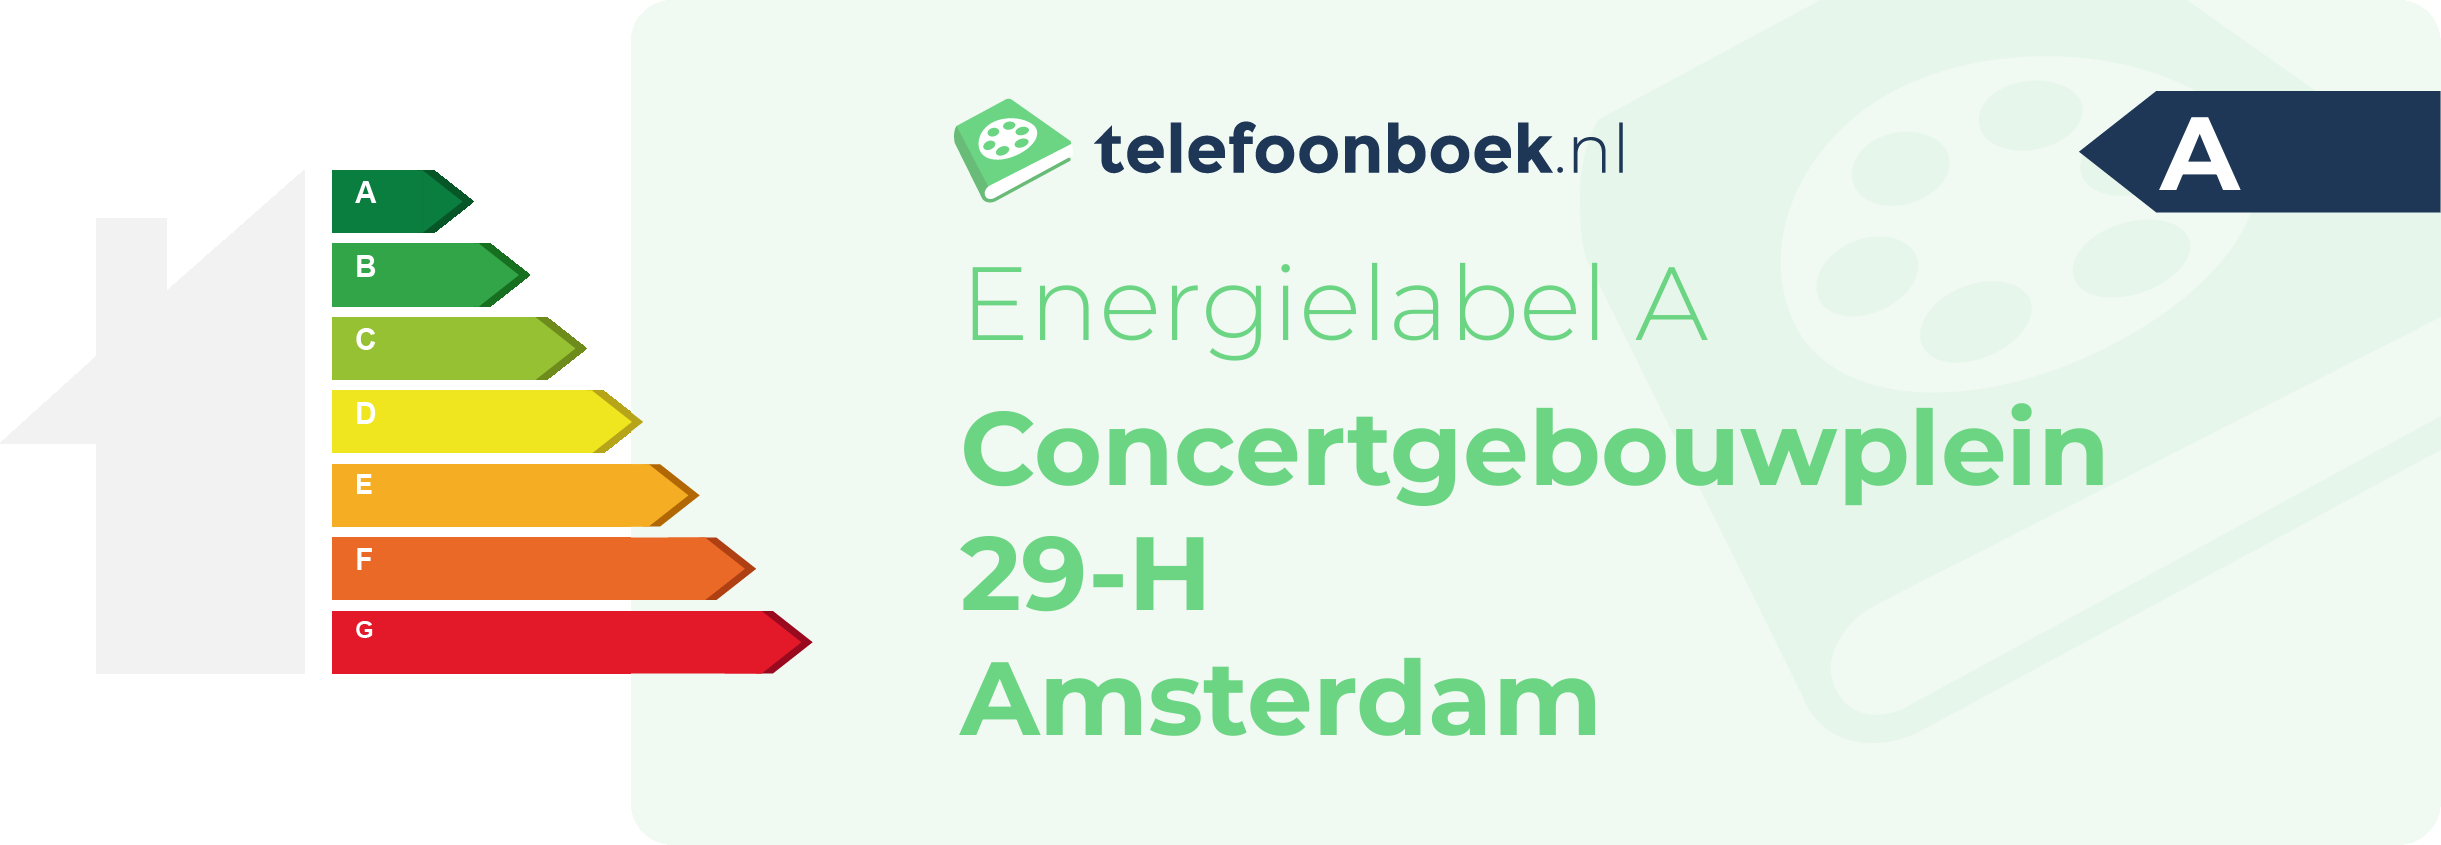 Energielabel Concertgebouwplein 29-H Amsterdam